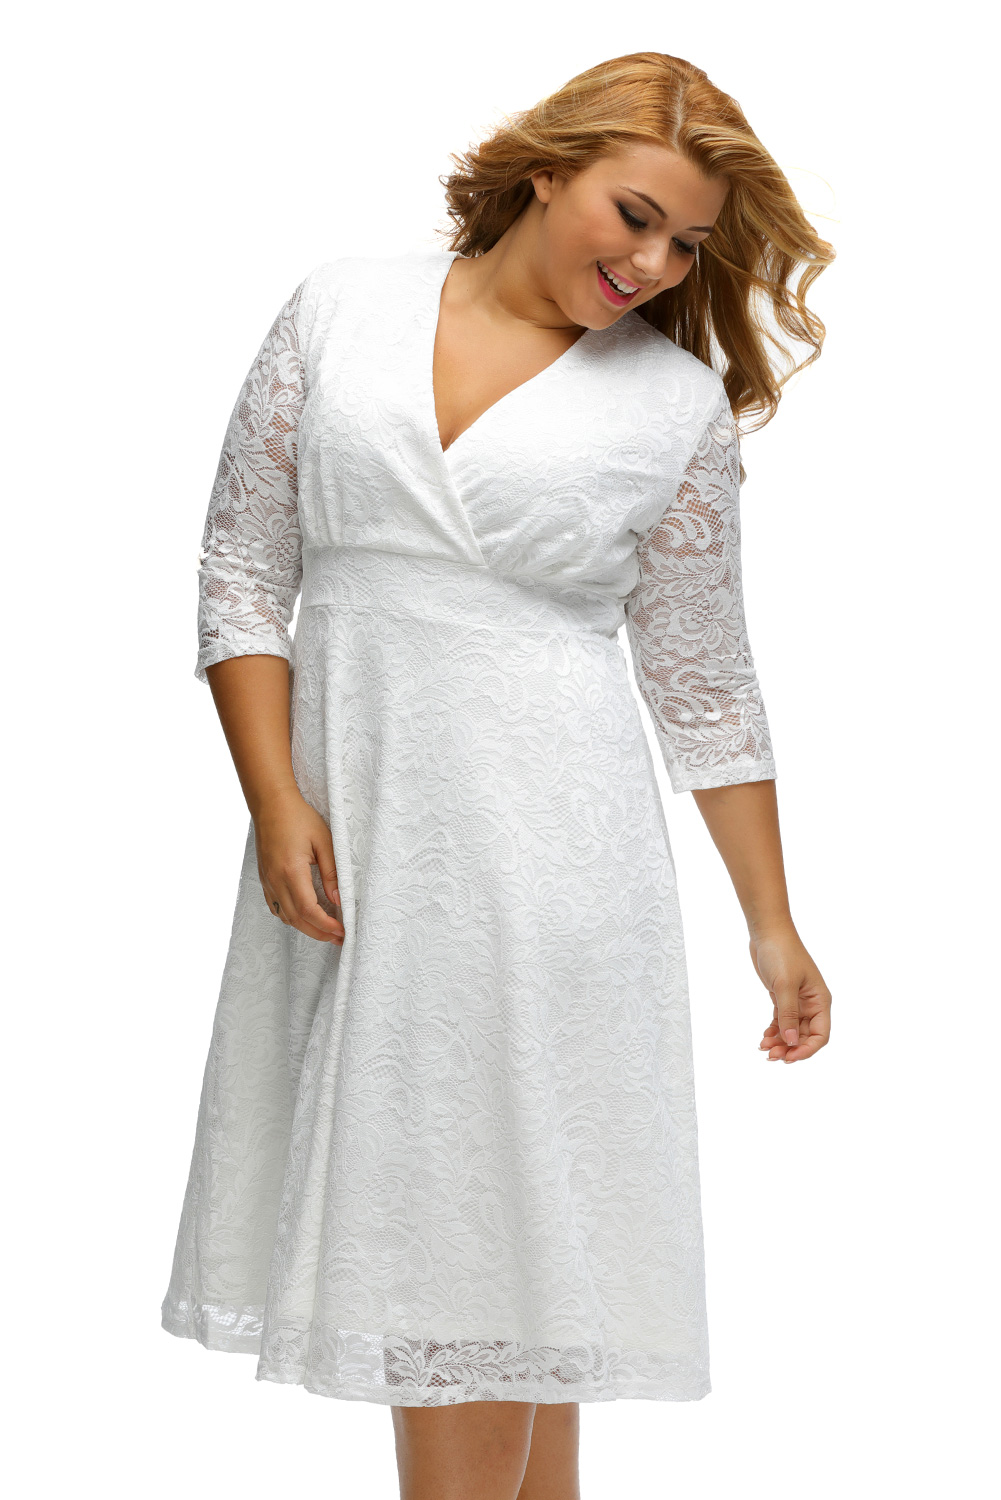 BY61442-1 White Plus Size Surplice Lace Formal Skater Dress